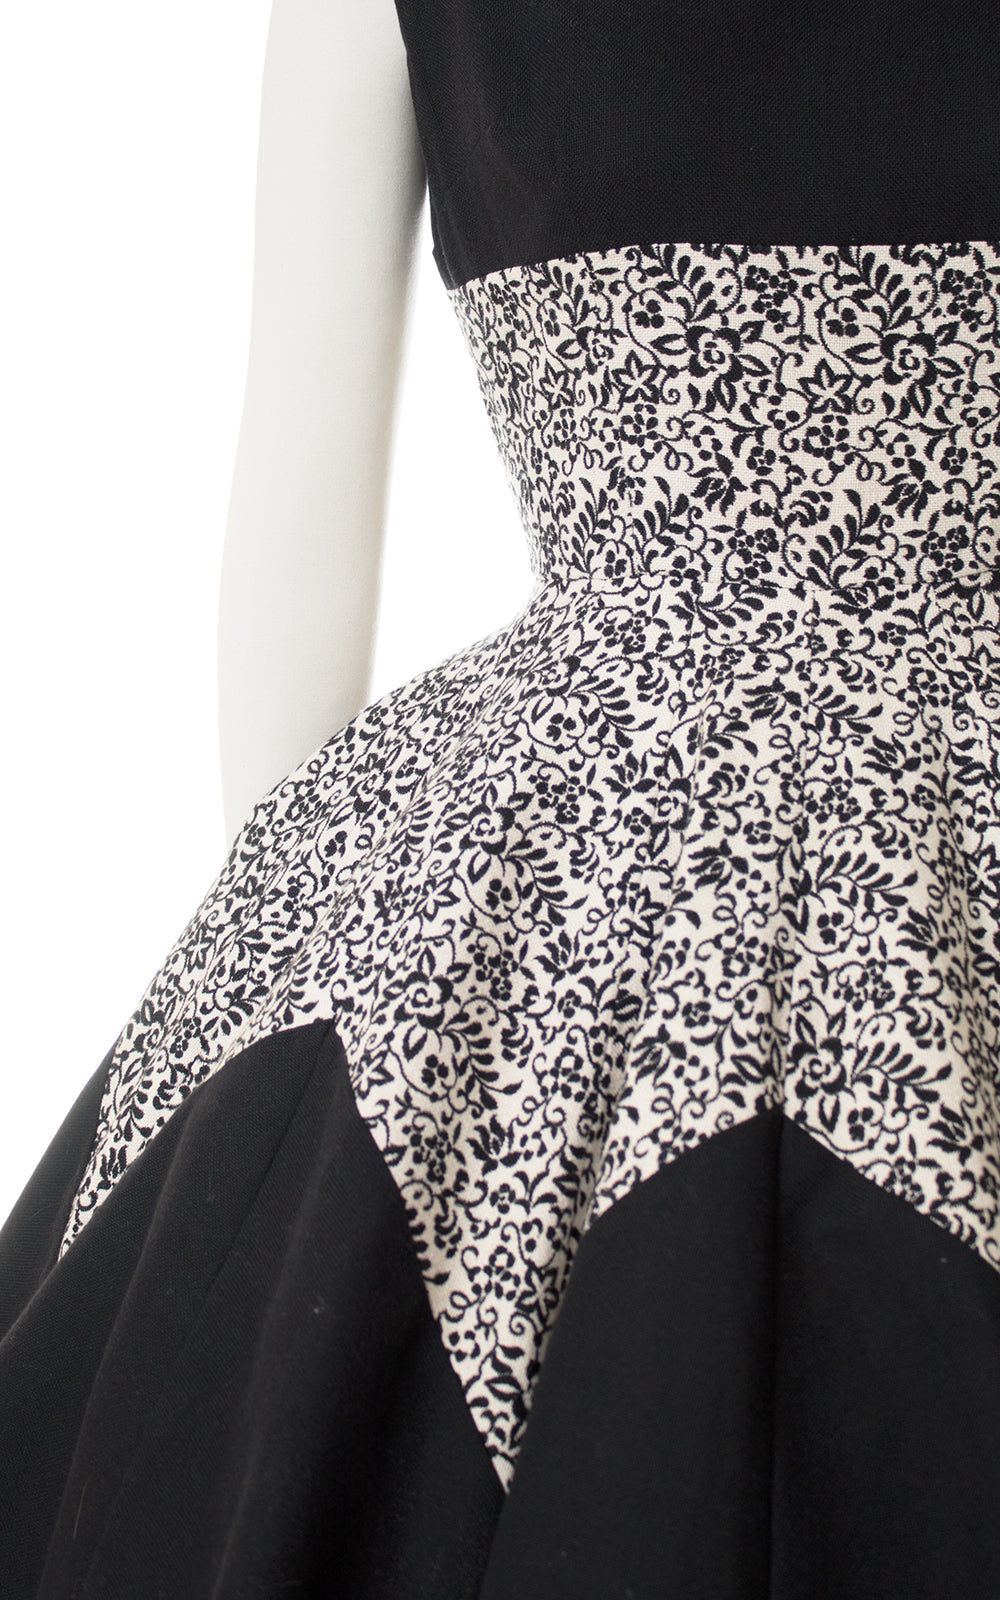 1950s Floral Zig Zag Circle Skirt Cotton Sundress